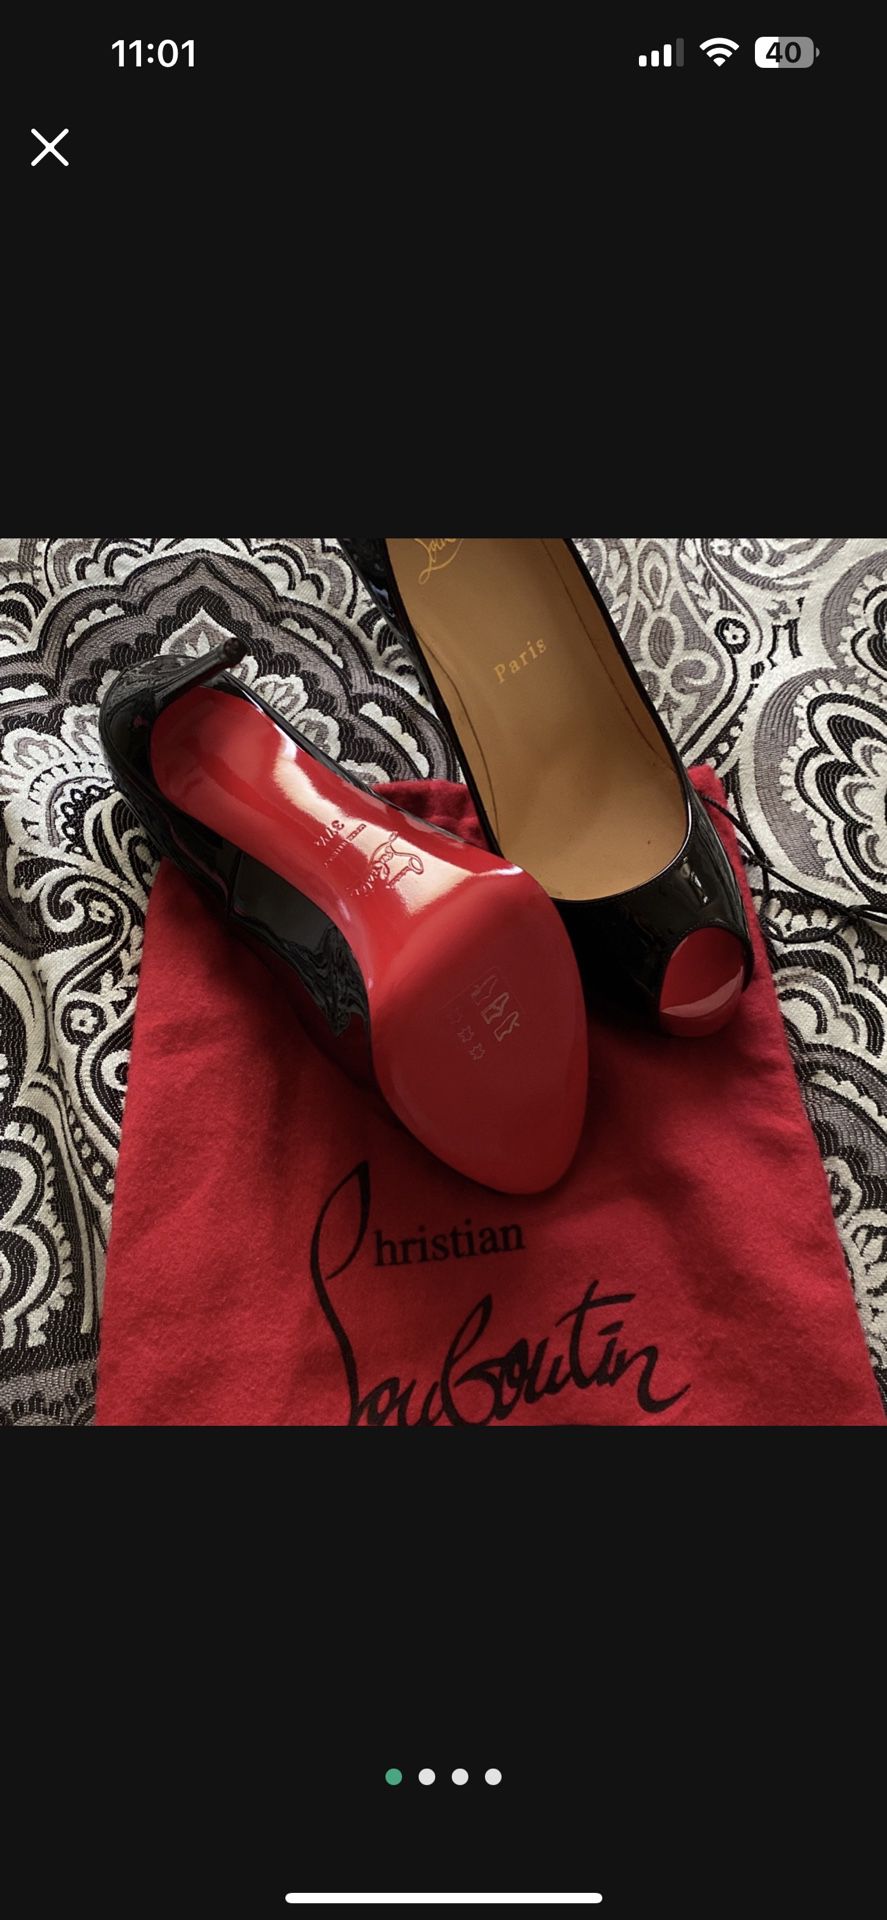 Christian Louboutin heels/Red bottoms *BRAND NEW* never worn.  